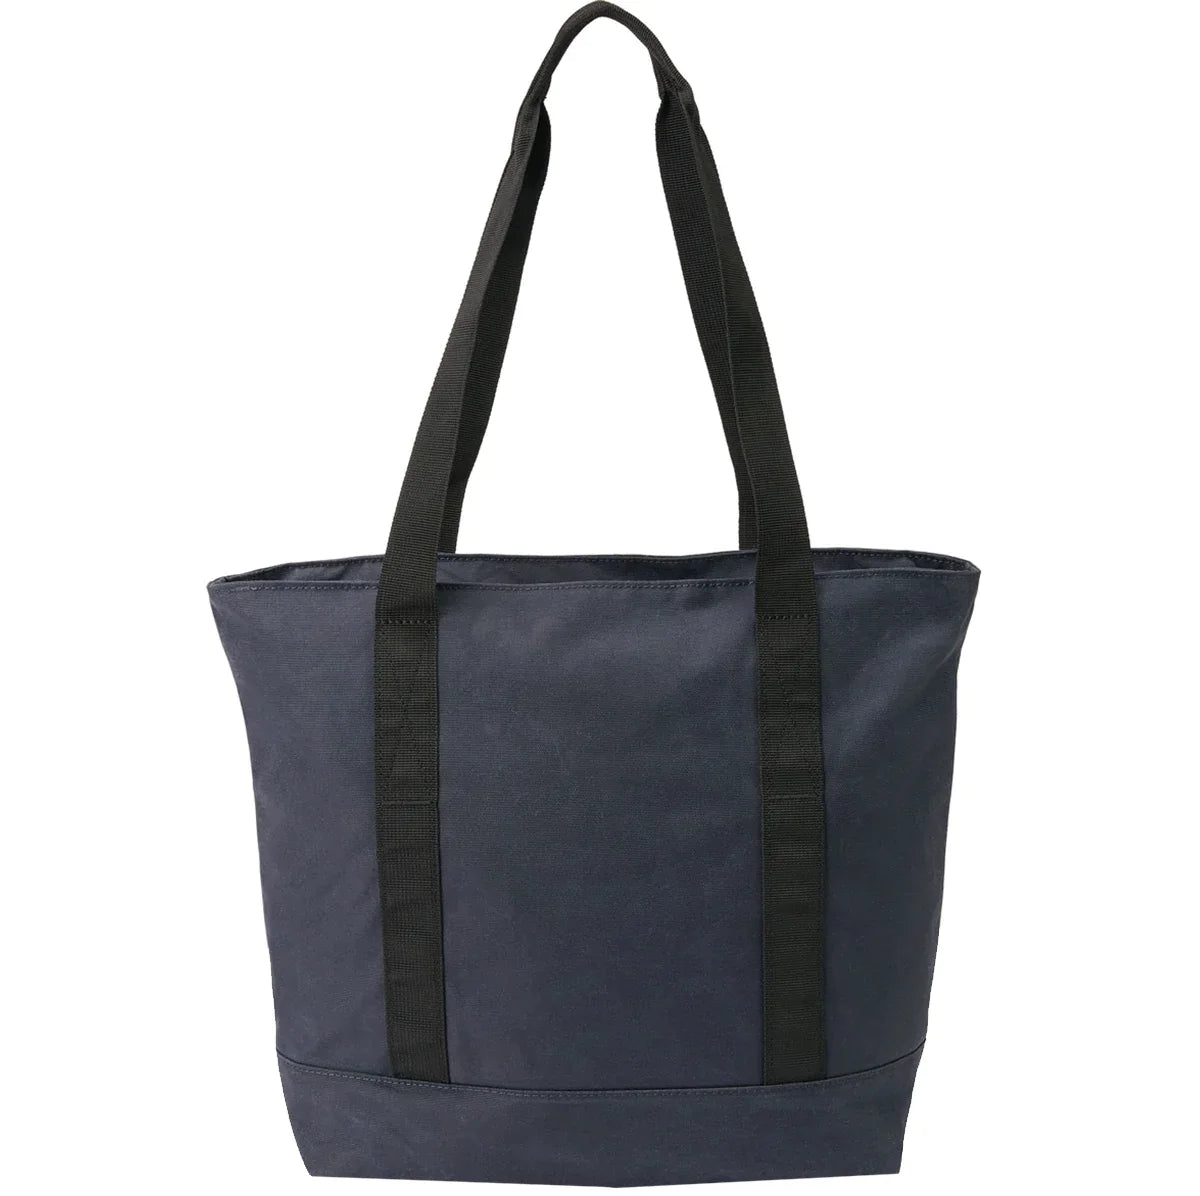 Dakine Packs &amp; Bags Classic Tote 18L sac à poignée 41 cm - Sand Quartz